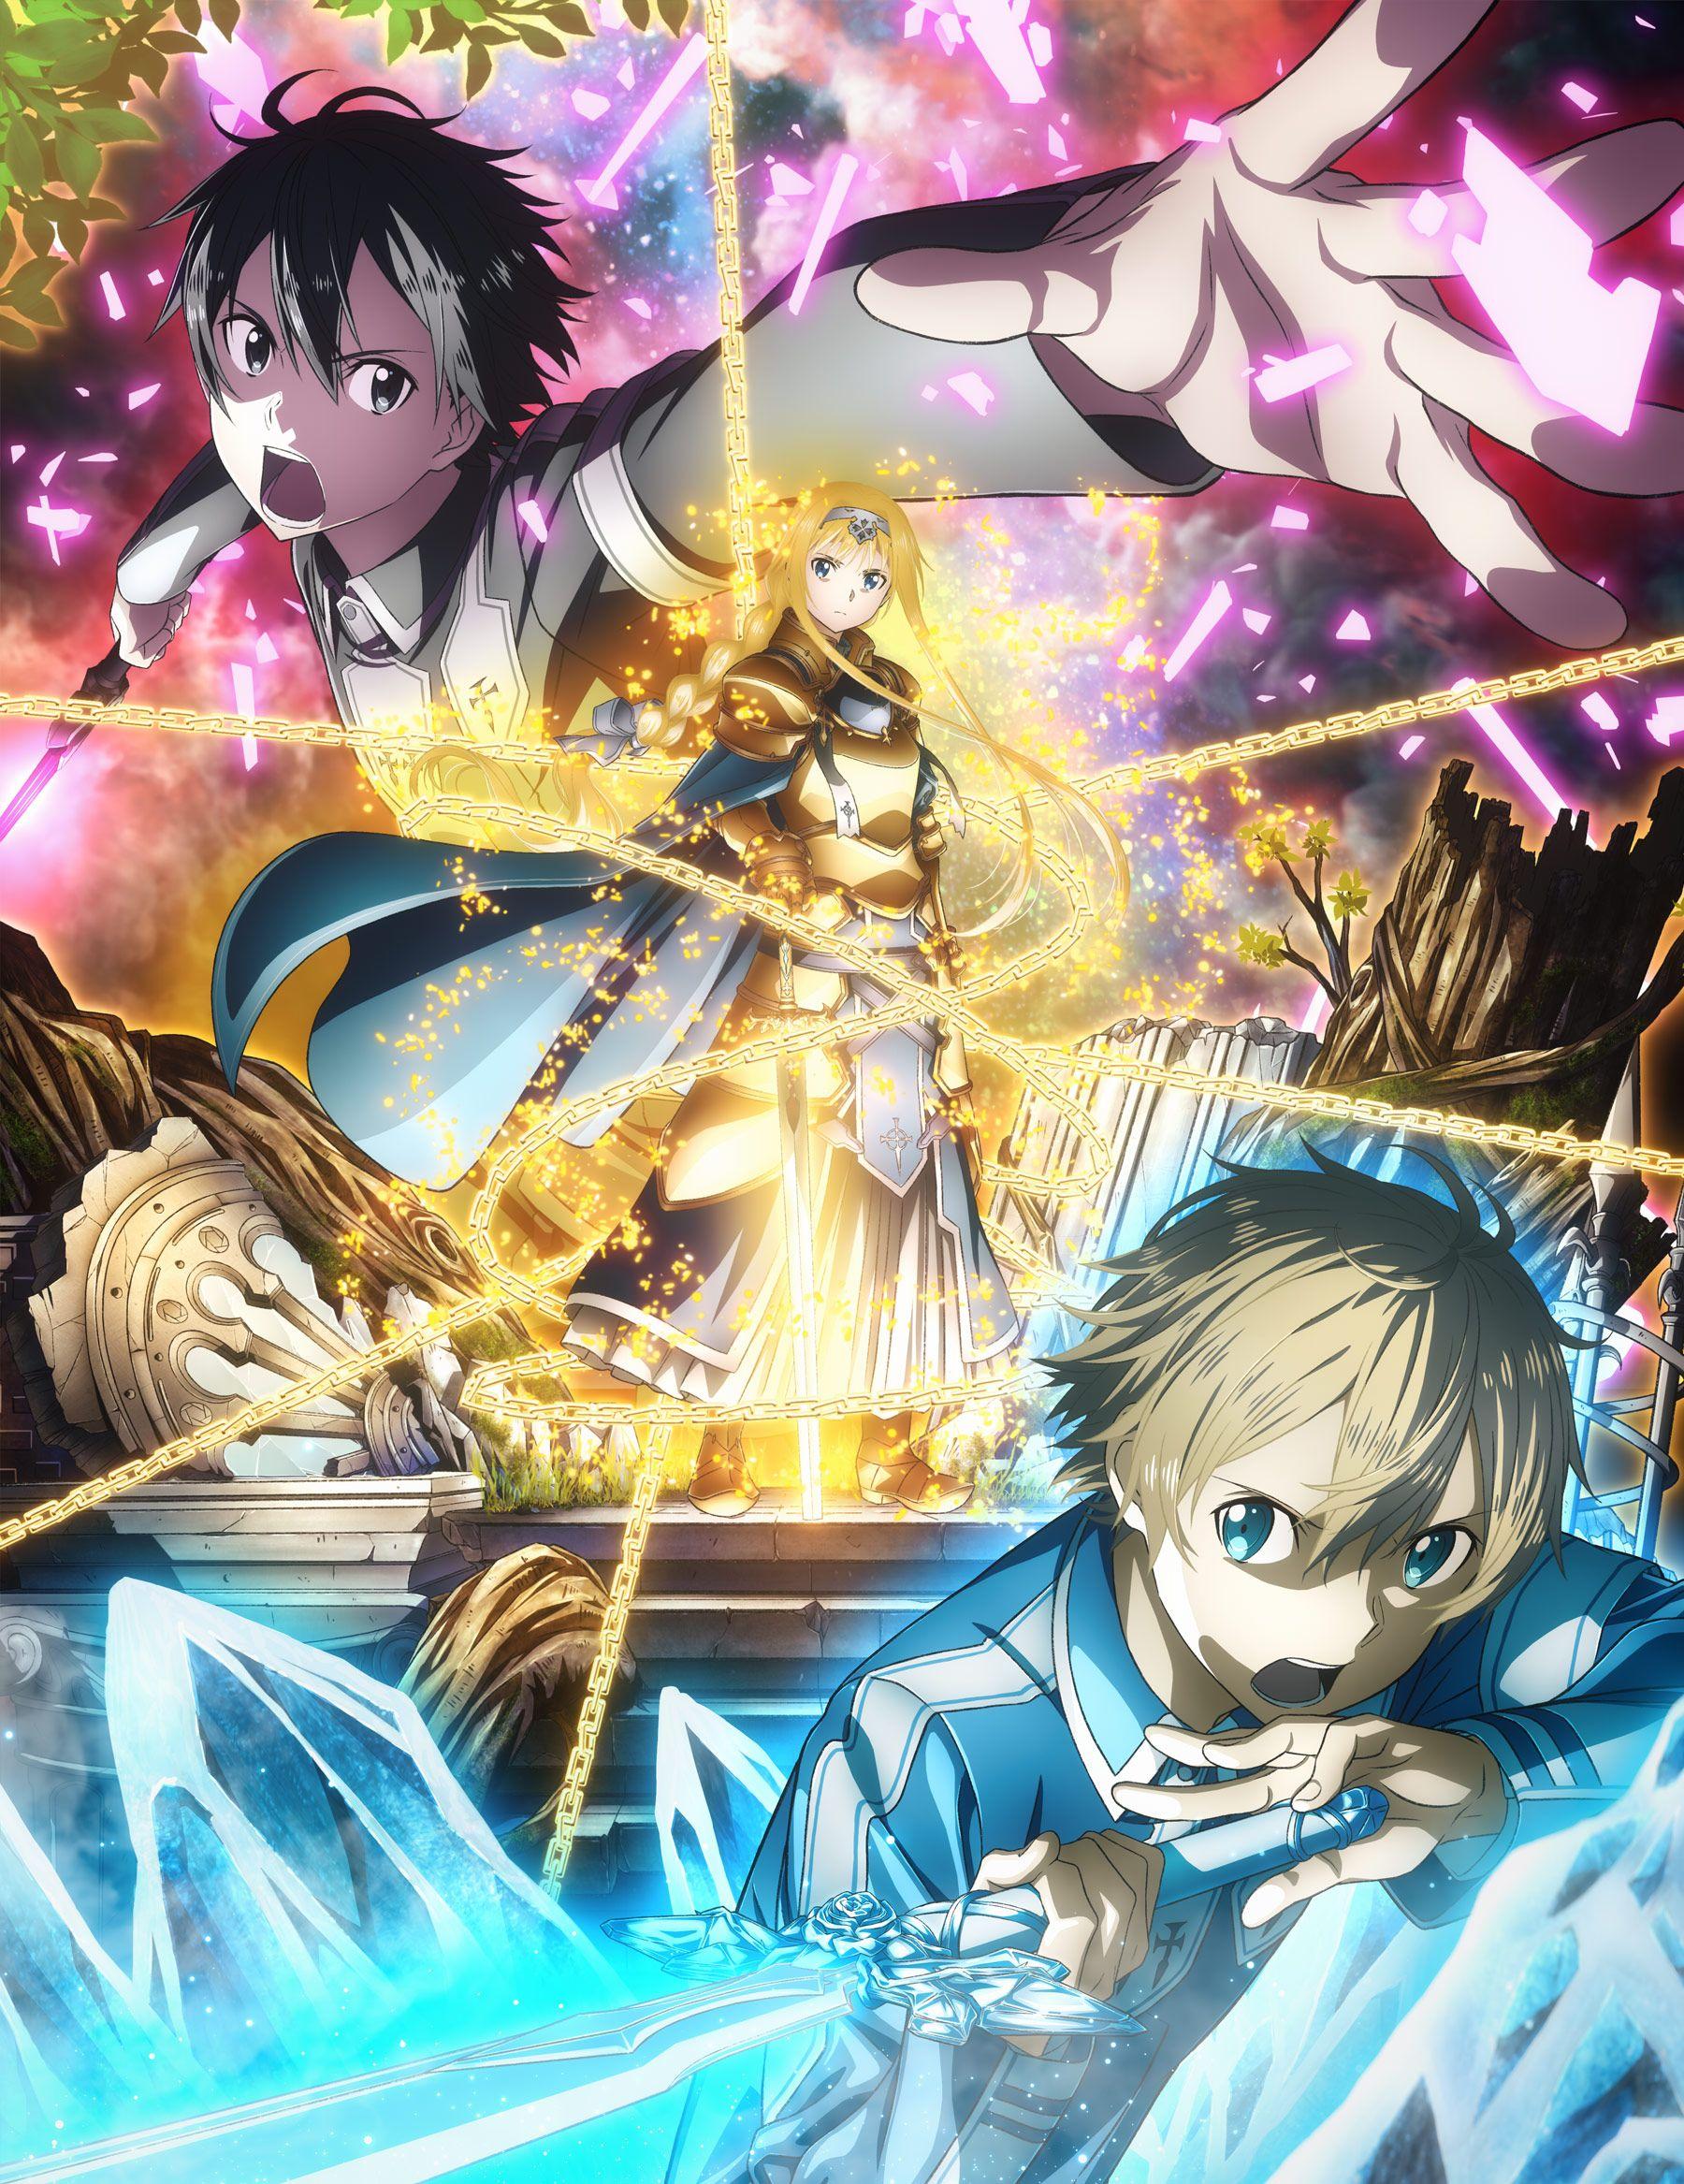 Sword Art Online: Alicization Anime Image Board